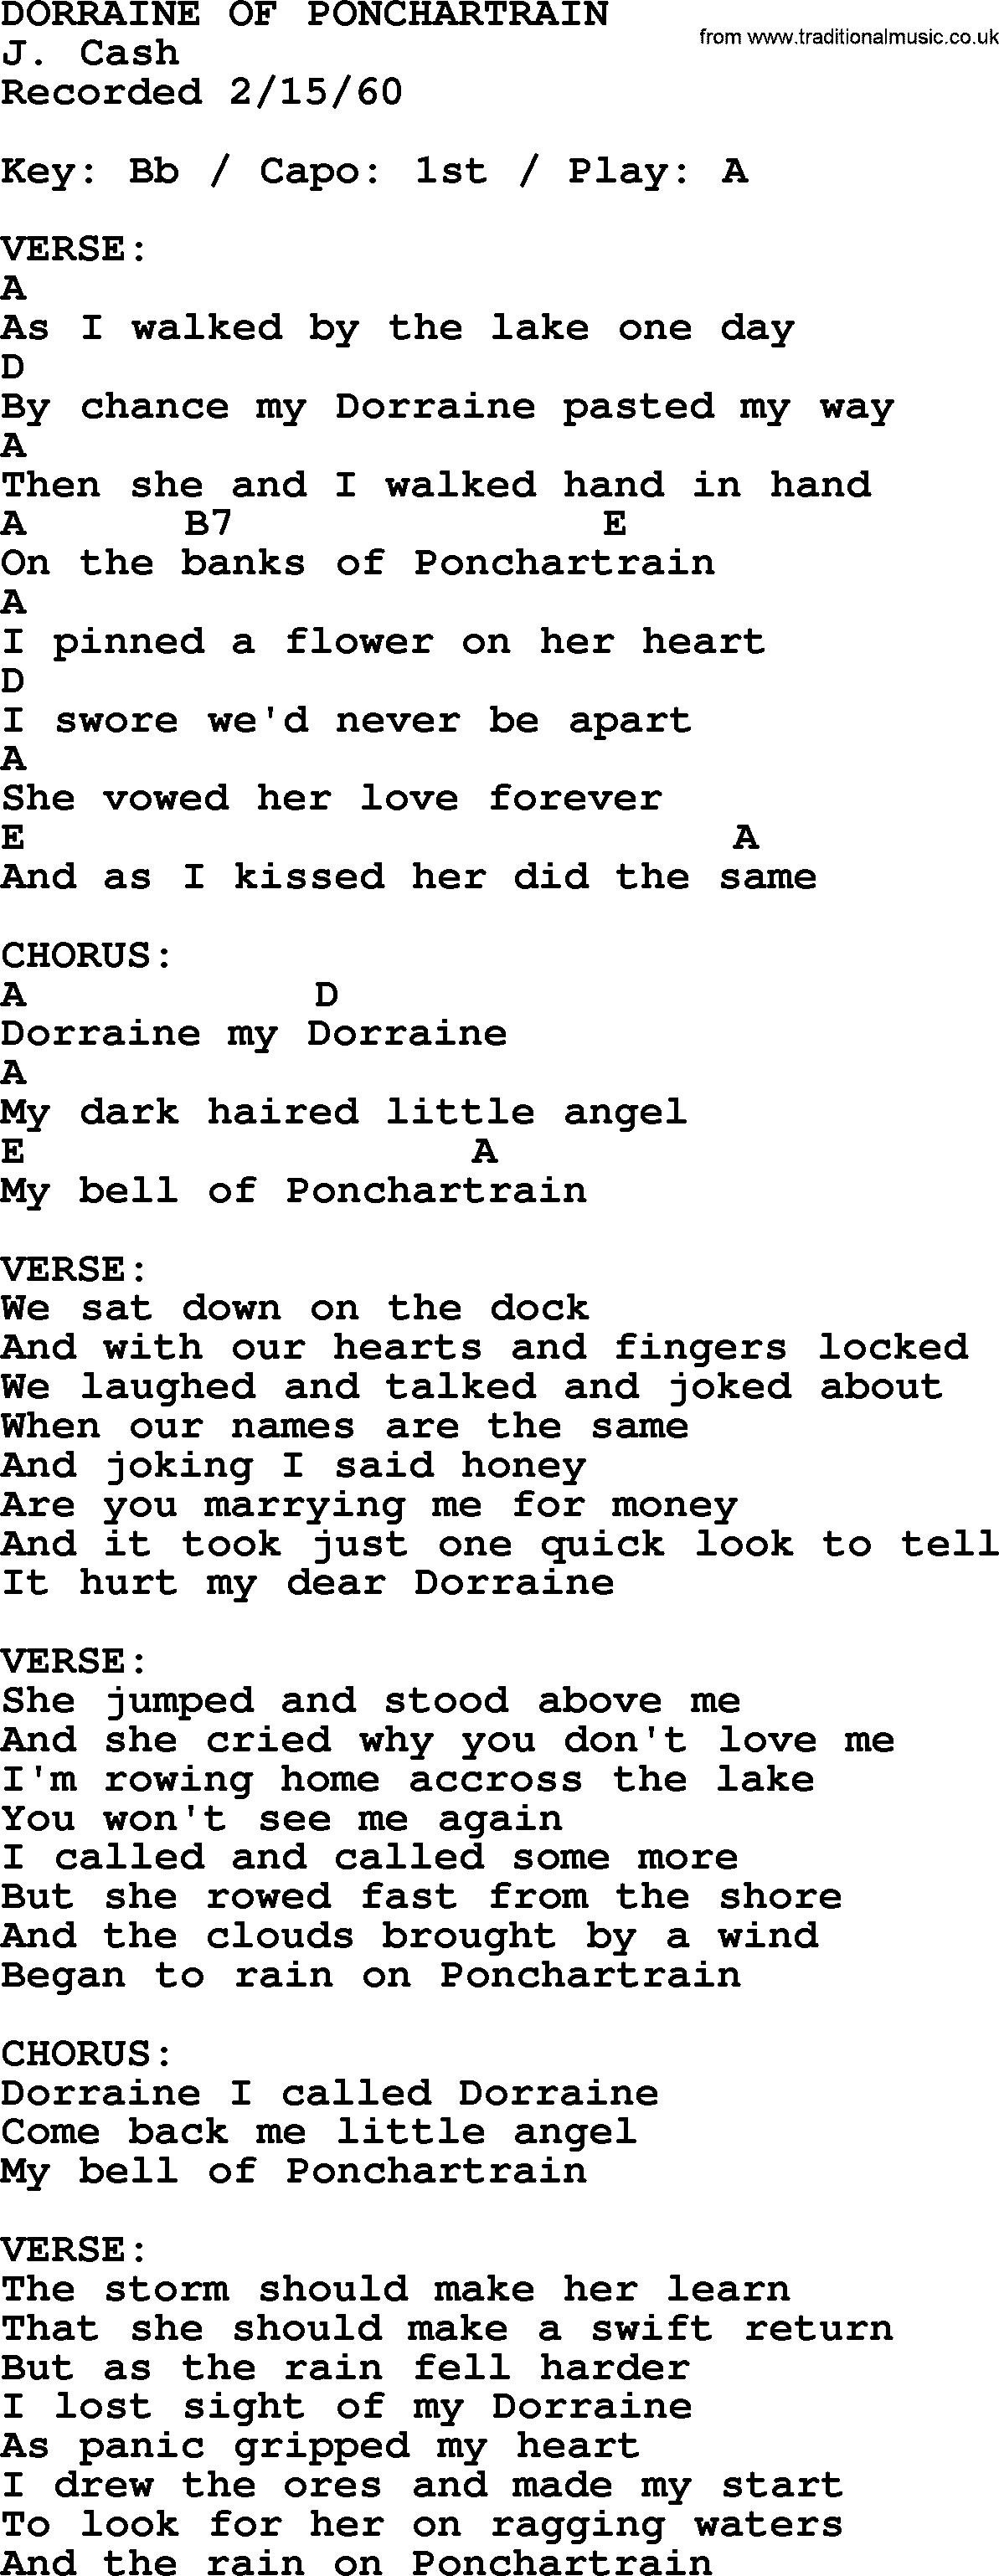 Johnny Cash song Dorraine Of Ponchartrain, lyrics and chords